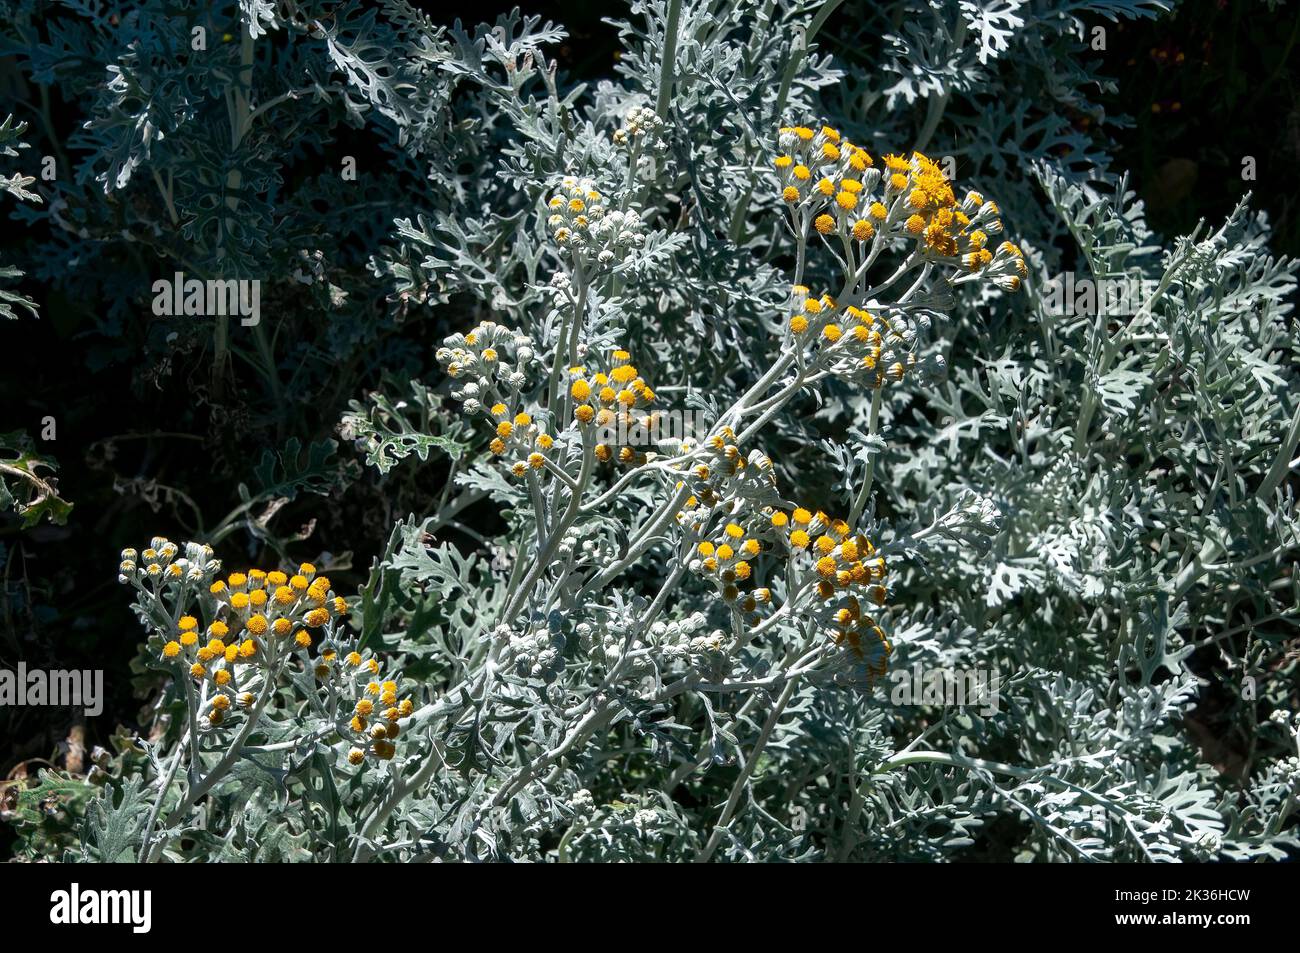 Sydney Australia, flowering dusty miller plant in garden bed Stock Photo